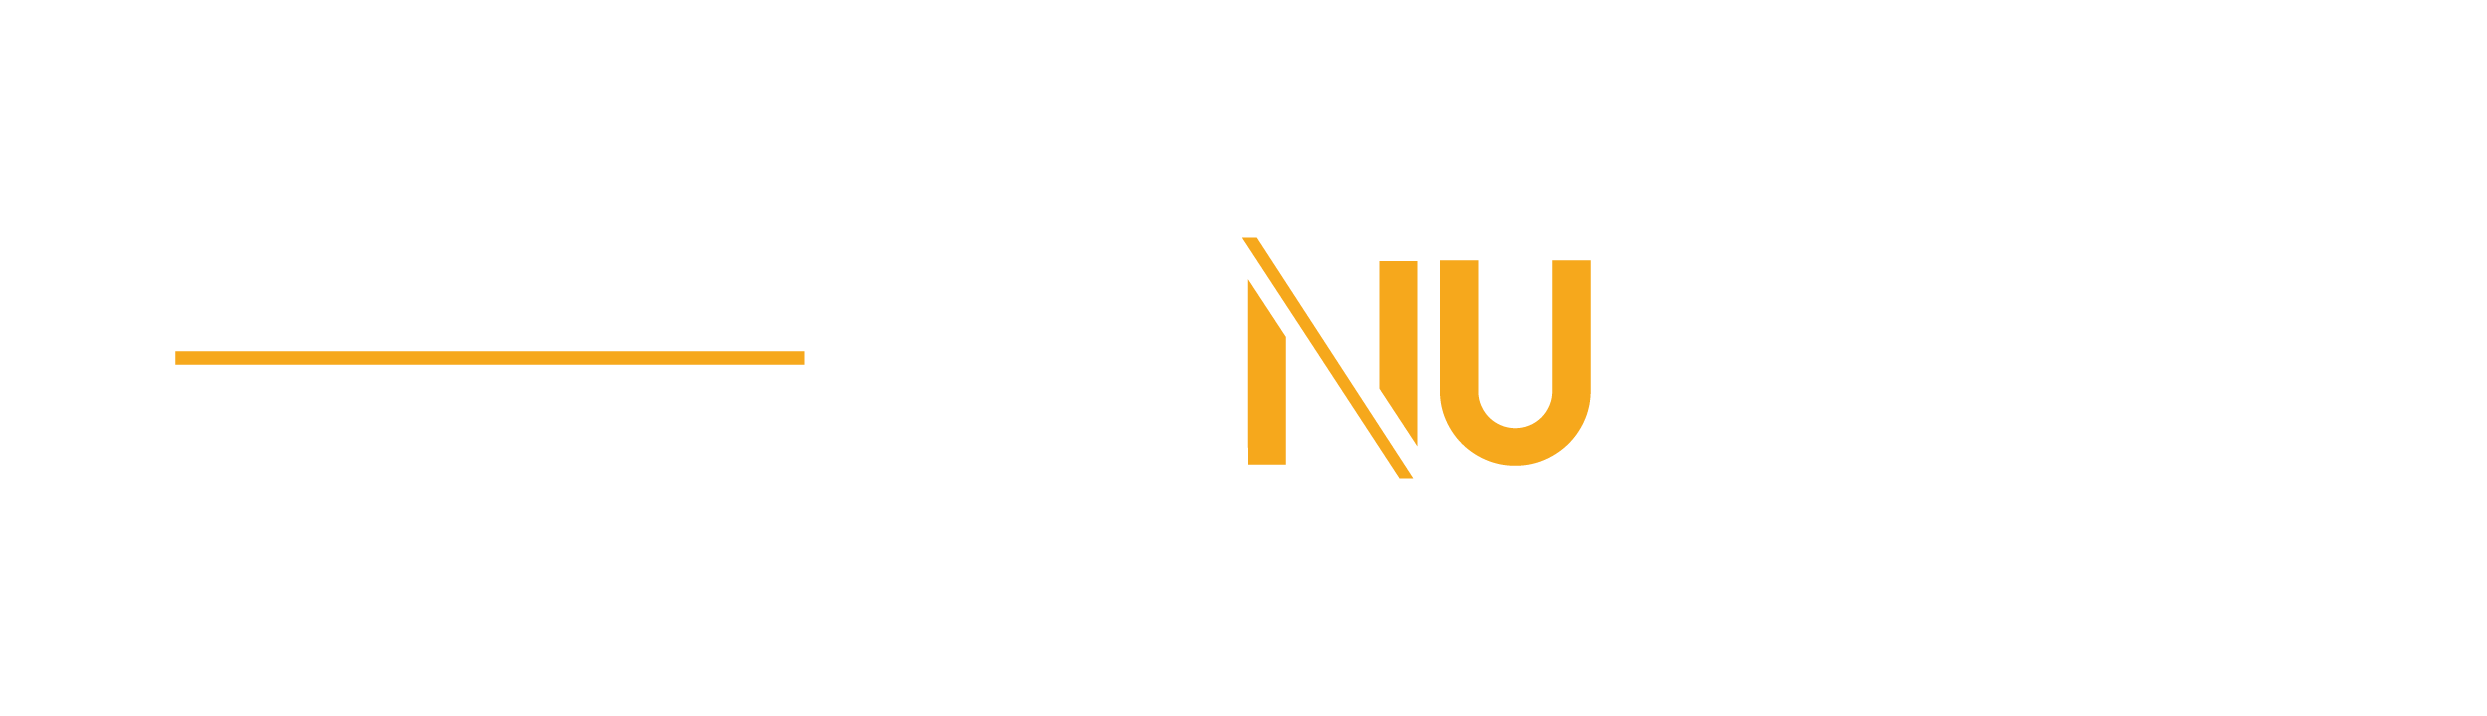 Renuleum_H-Colour on black